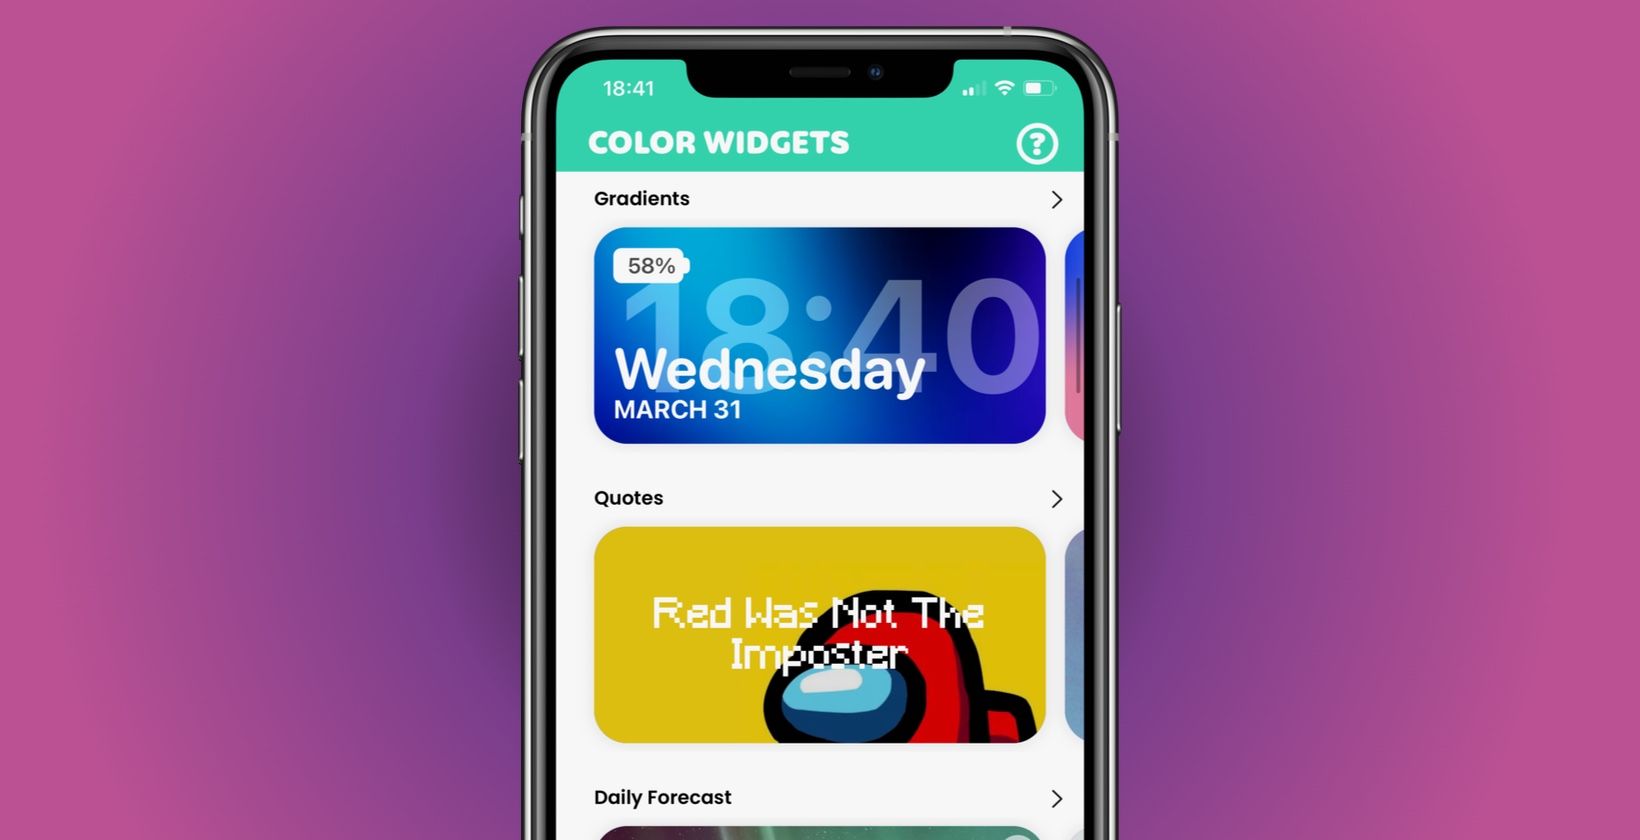 Color Widgets has lots of pre-made custom widgets for iPhone